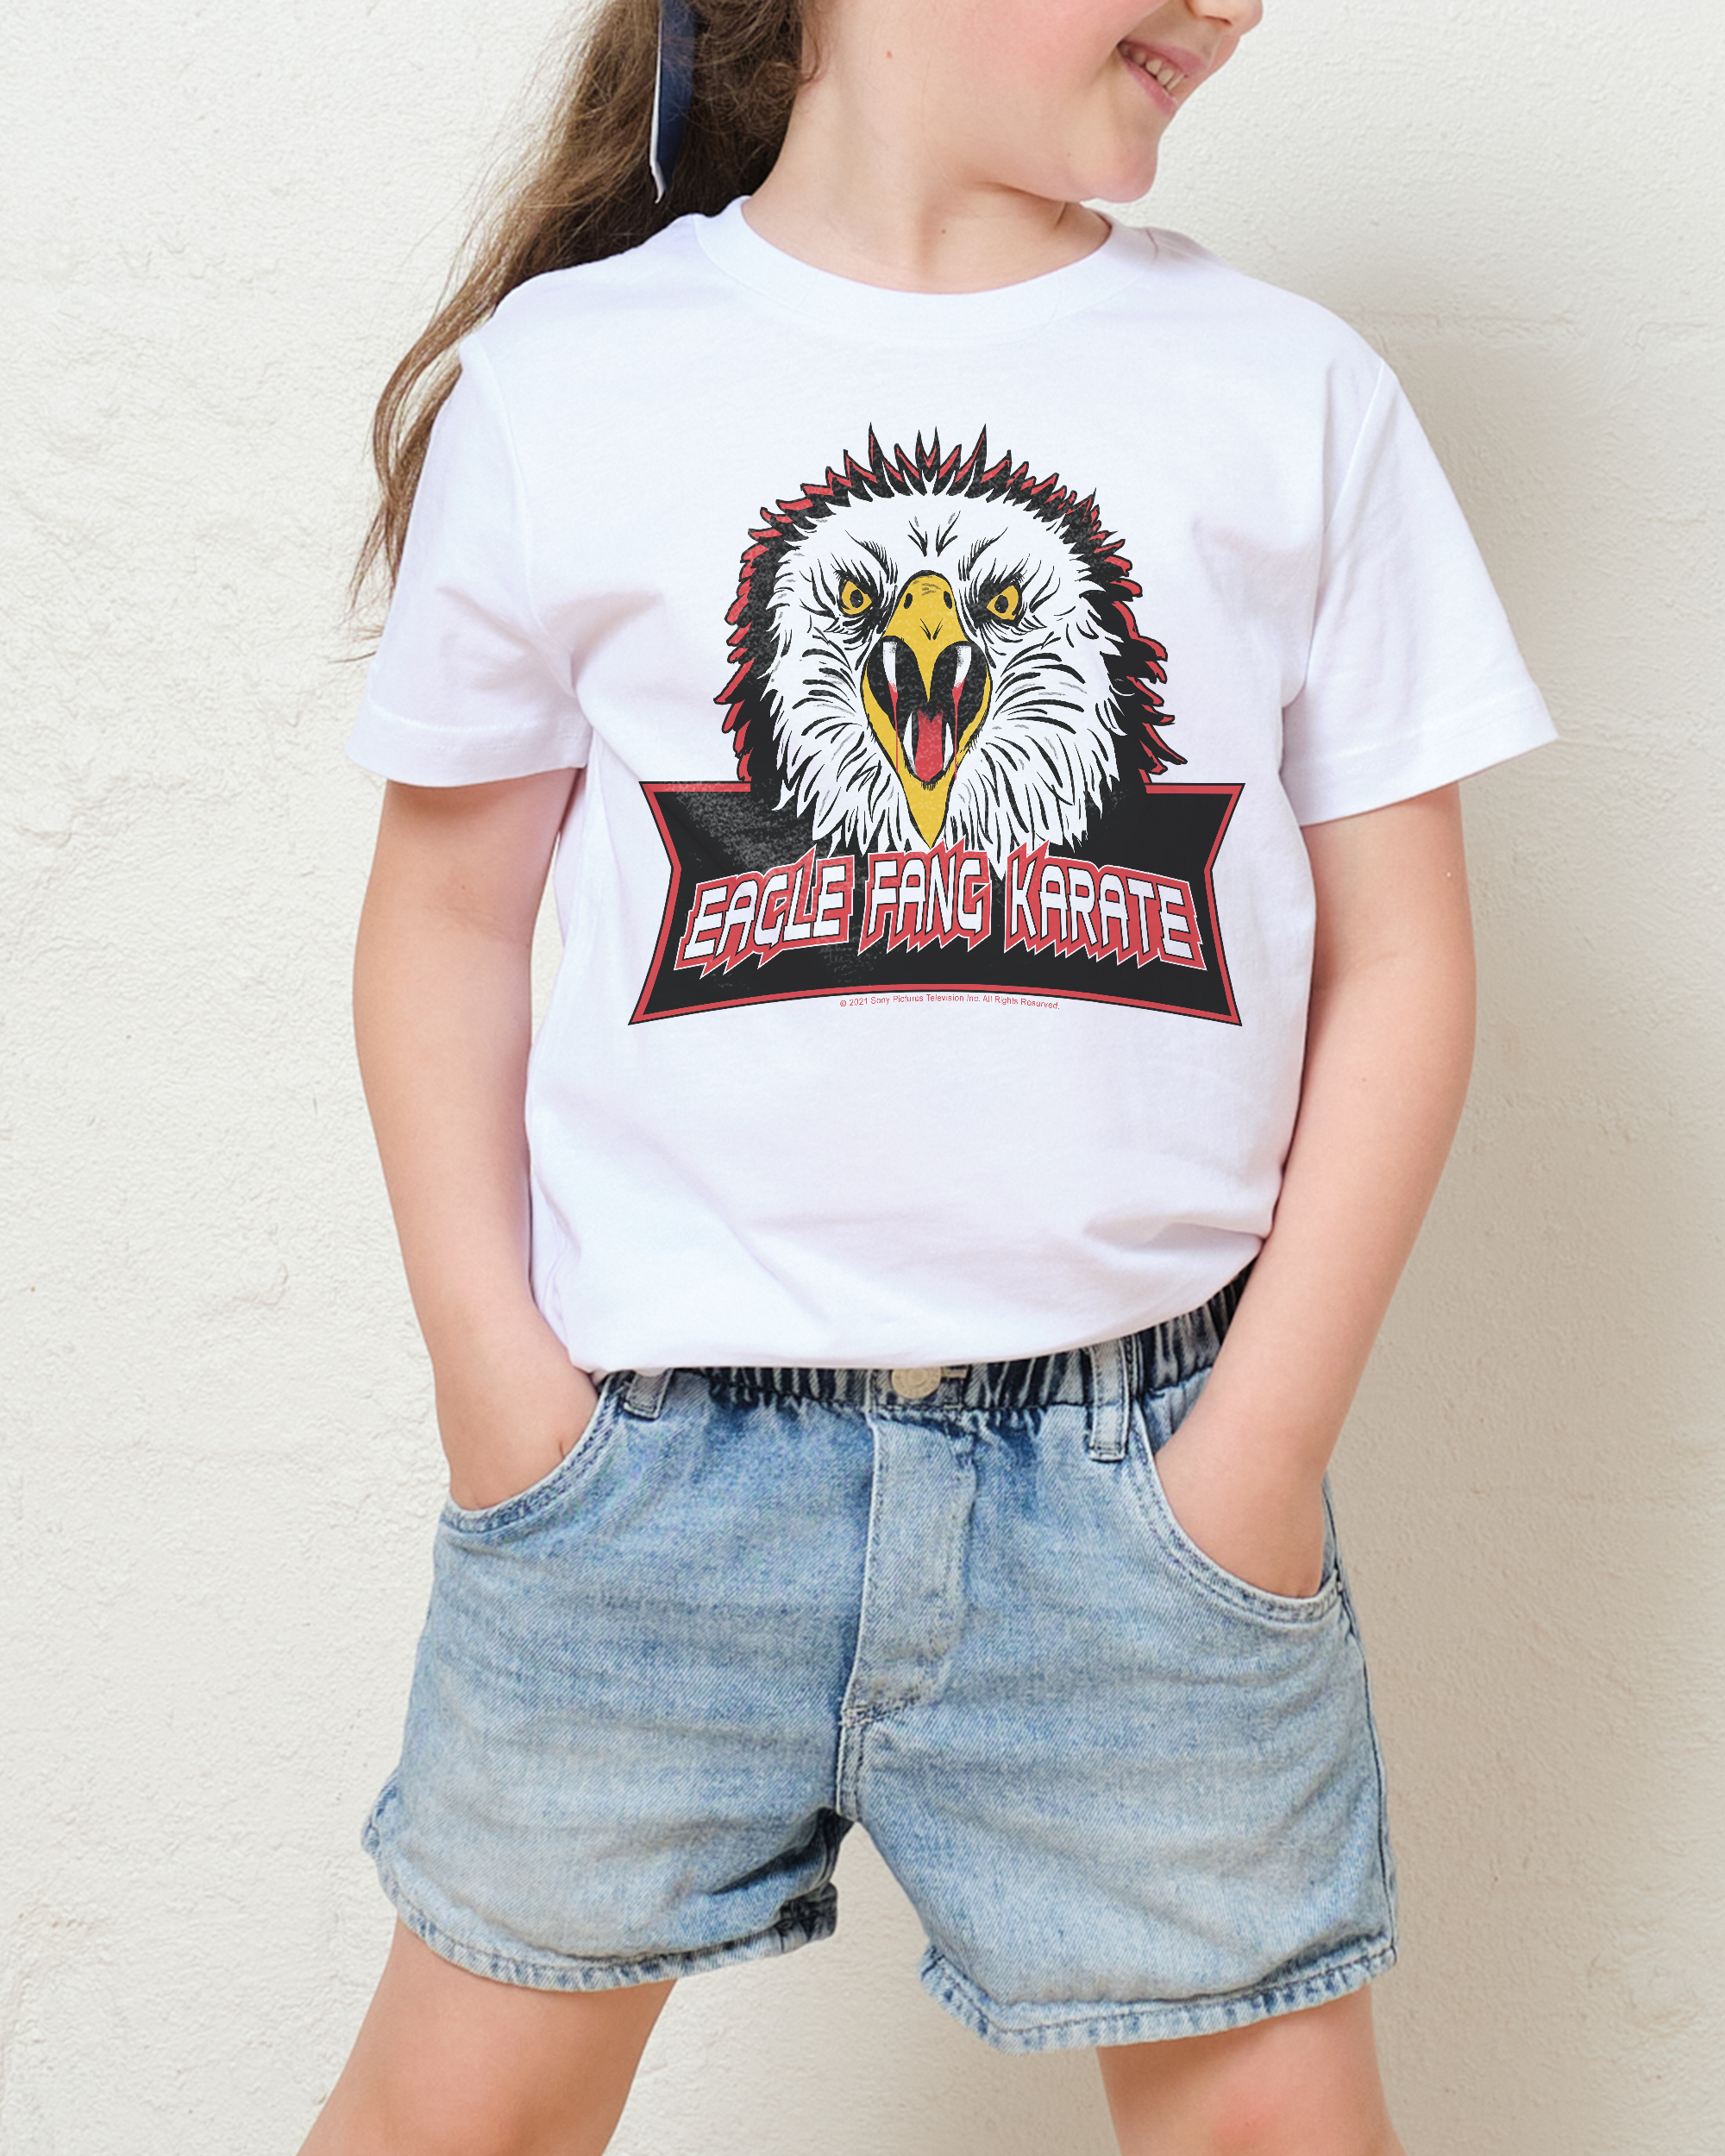 Eagle Fang Karate Logo Kids T-Shirt